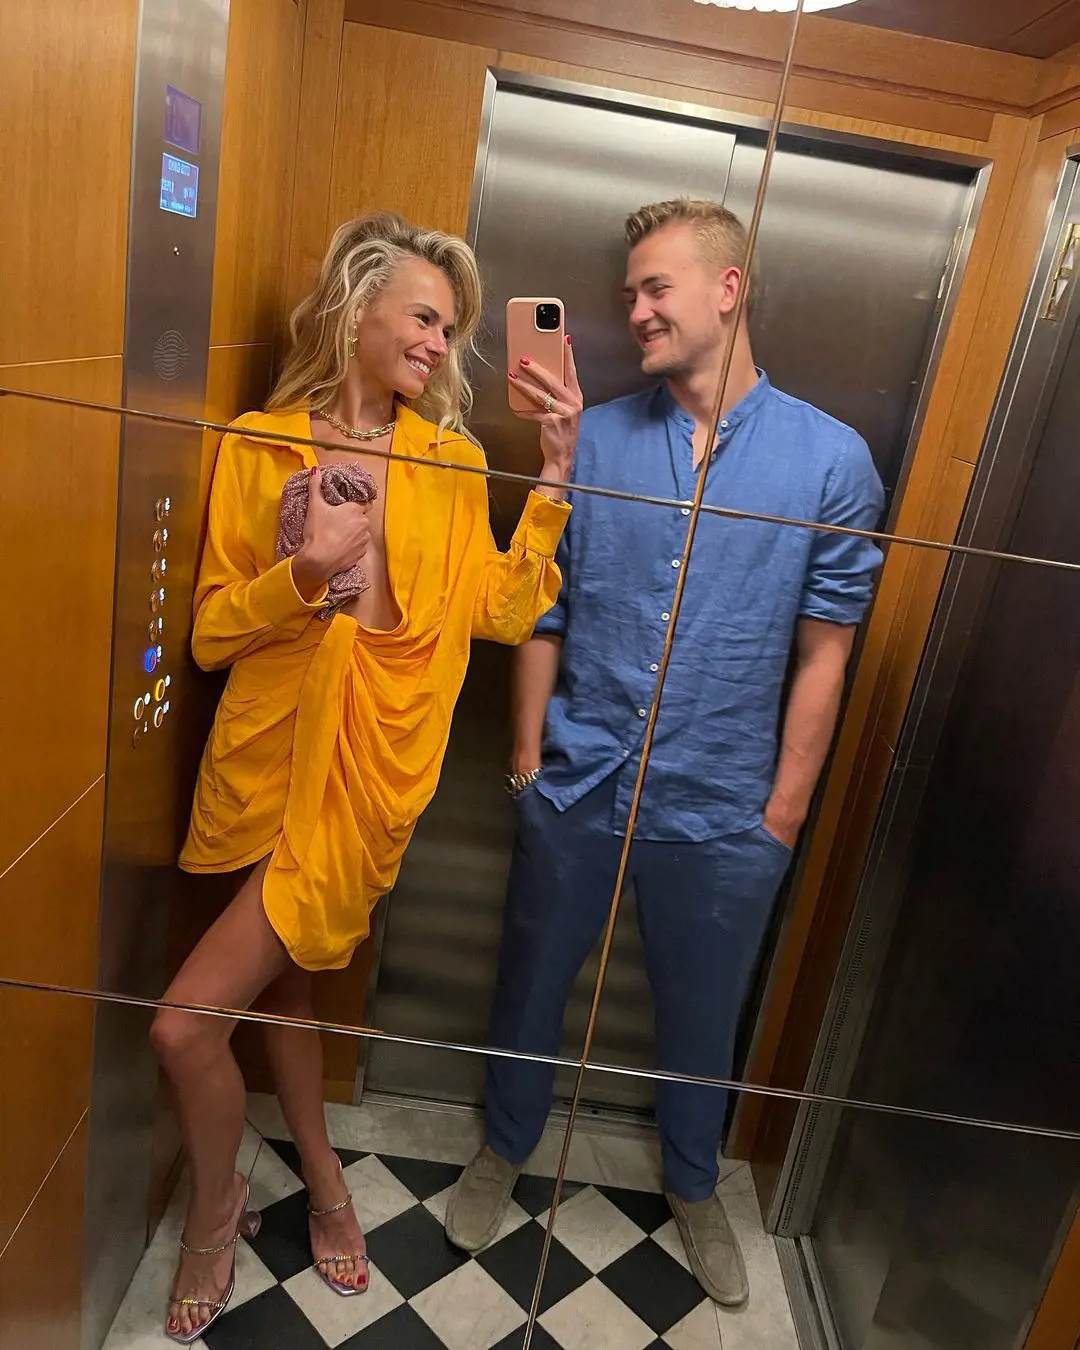 AnneKee Molenaar snapping a mirror selfie with her beau Matthijs de Ligt in a elevator in November 2022